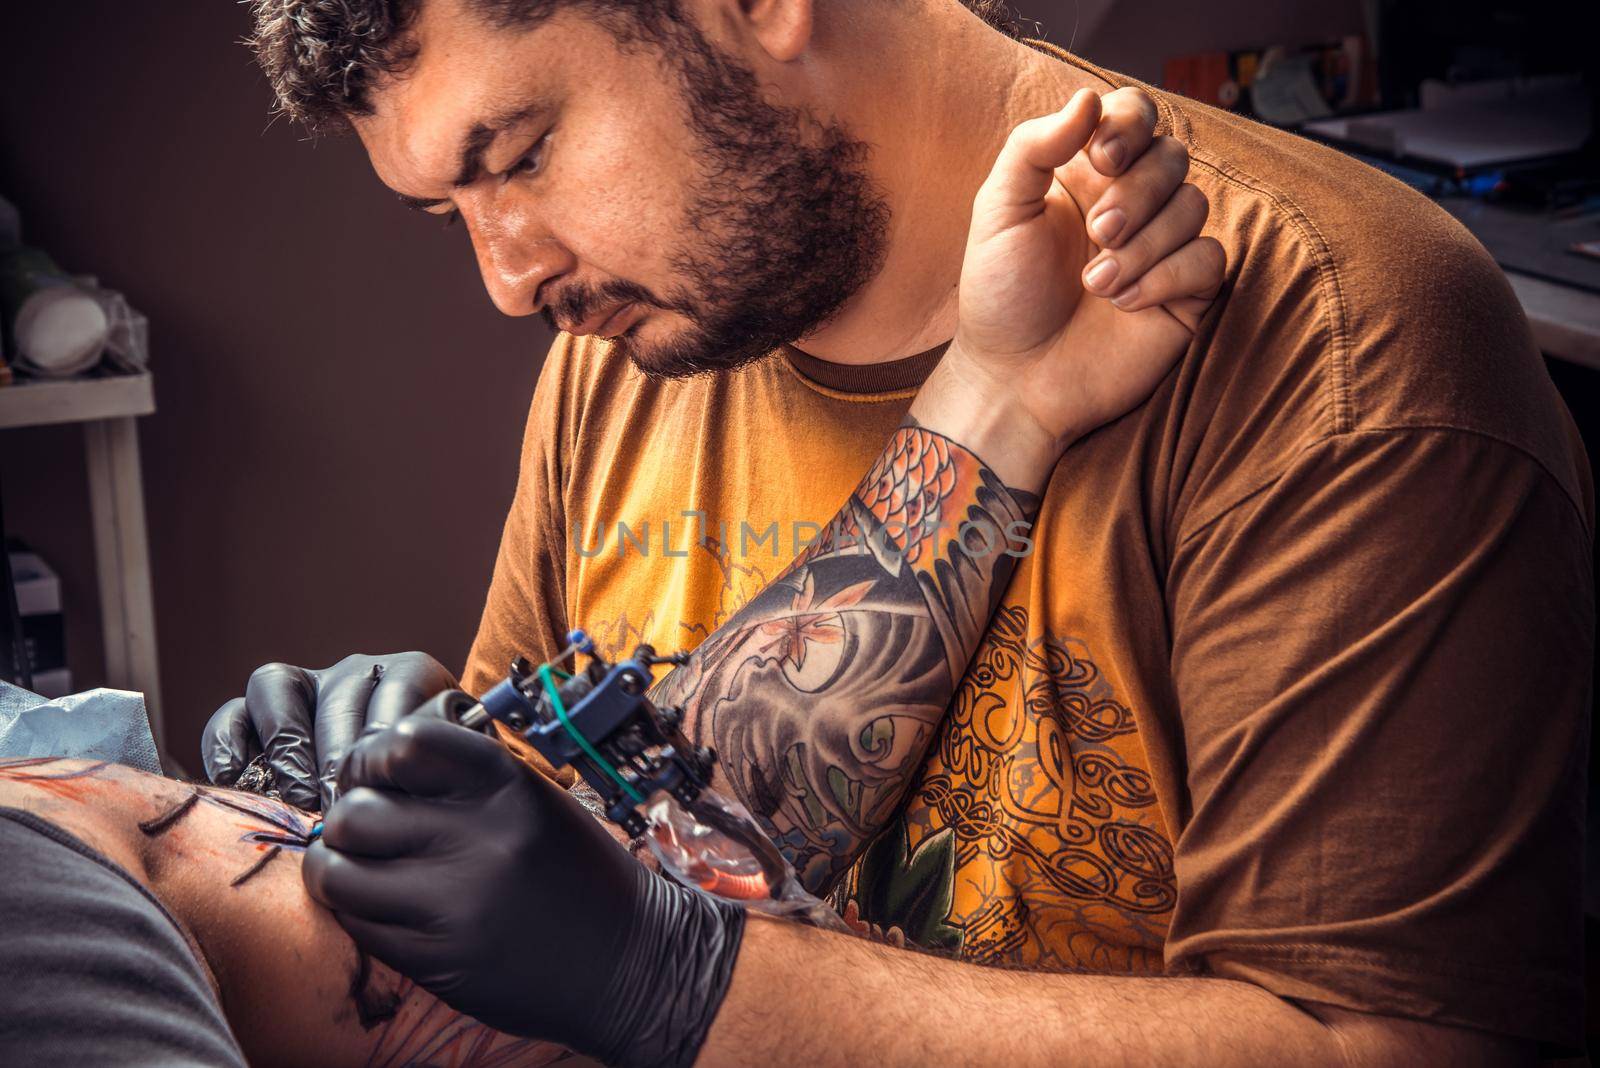 Tattooer at work in tattoo studio by Proff